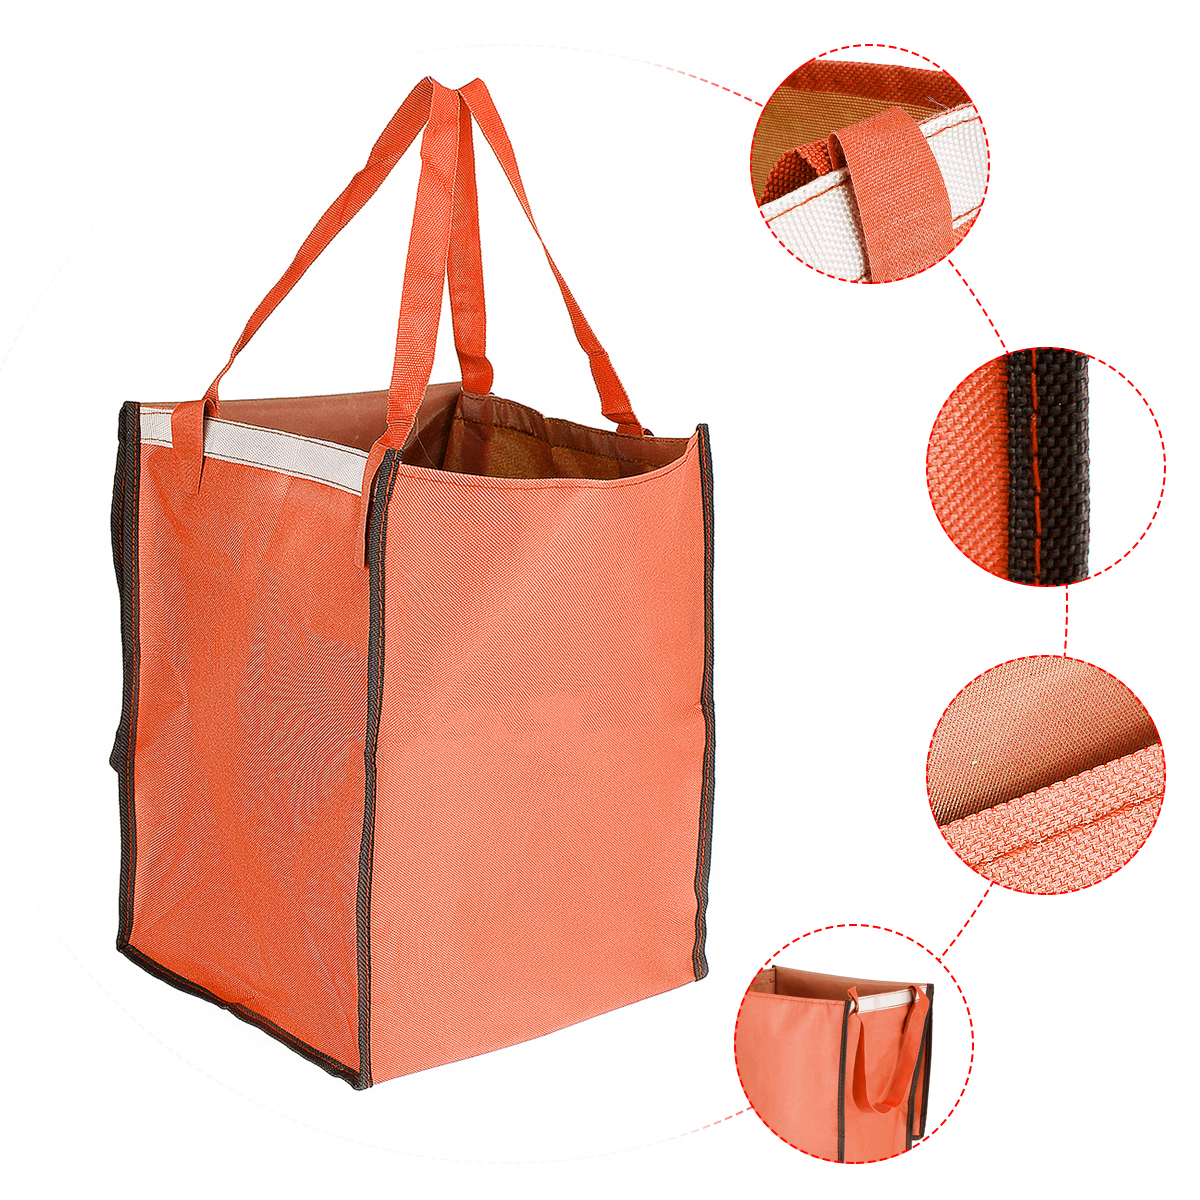 Shopping-Cart-Fabric-Bag-Portable-Folding-Oxford-Trolley-Rolling-Bag-Luggage-1800115-3